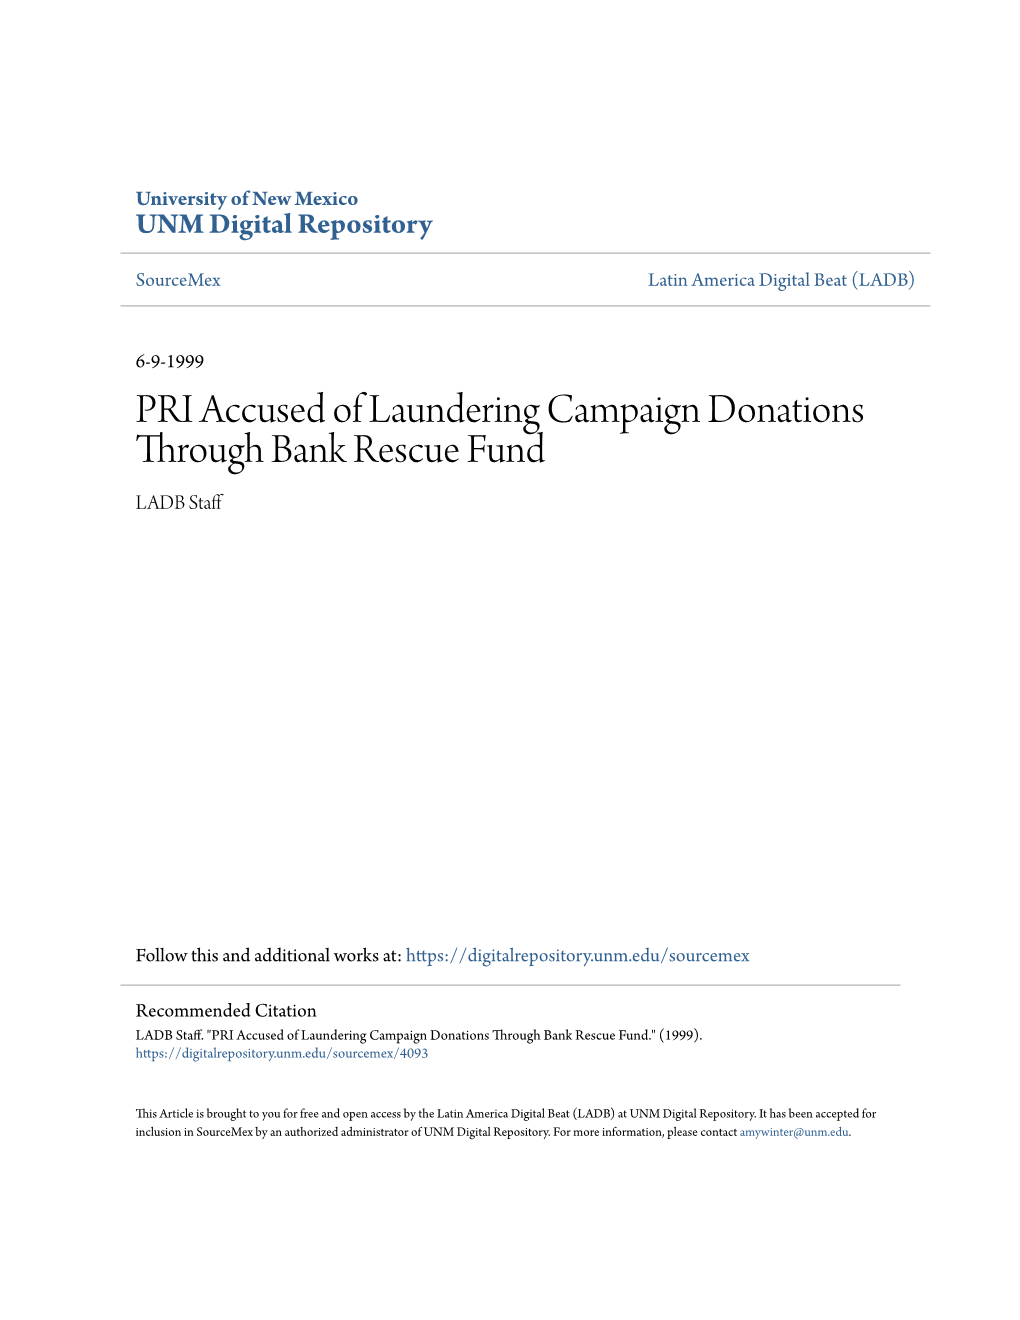 PRI Accused of Laundering Campaign Donations Through Bank Rescue Fund LADB Staff